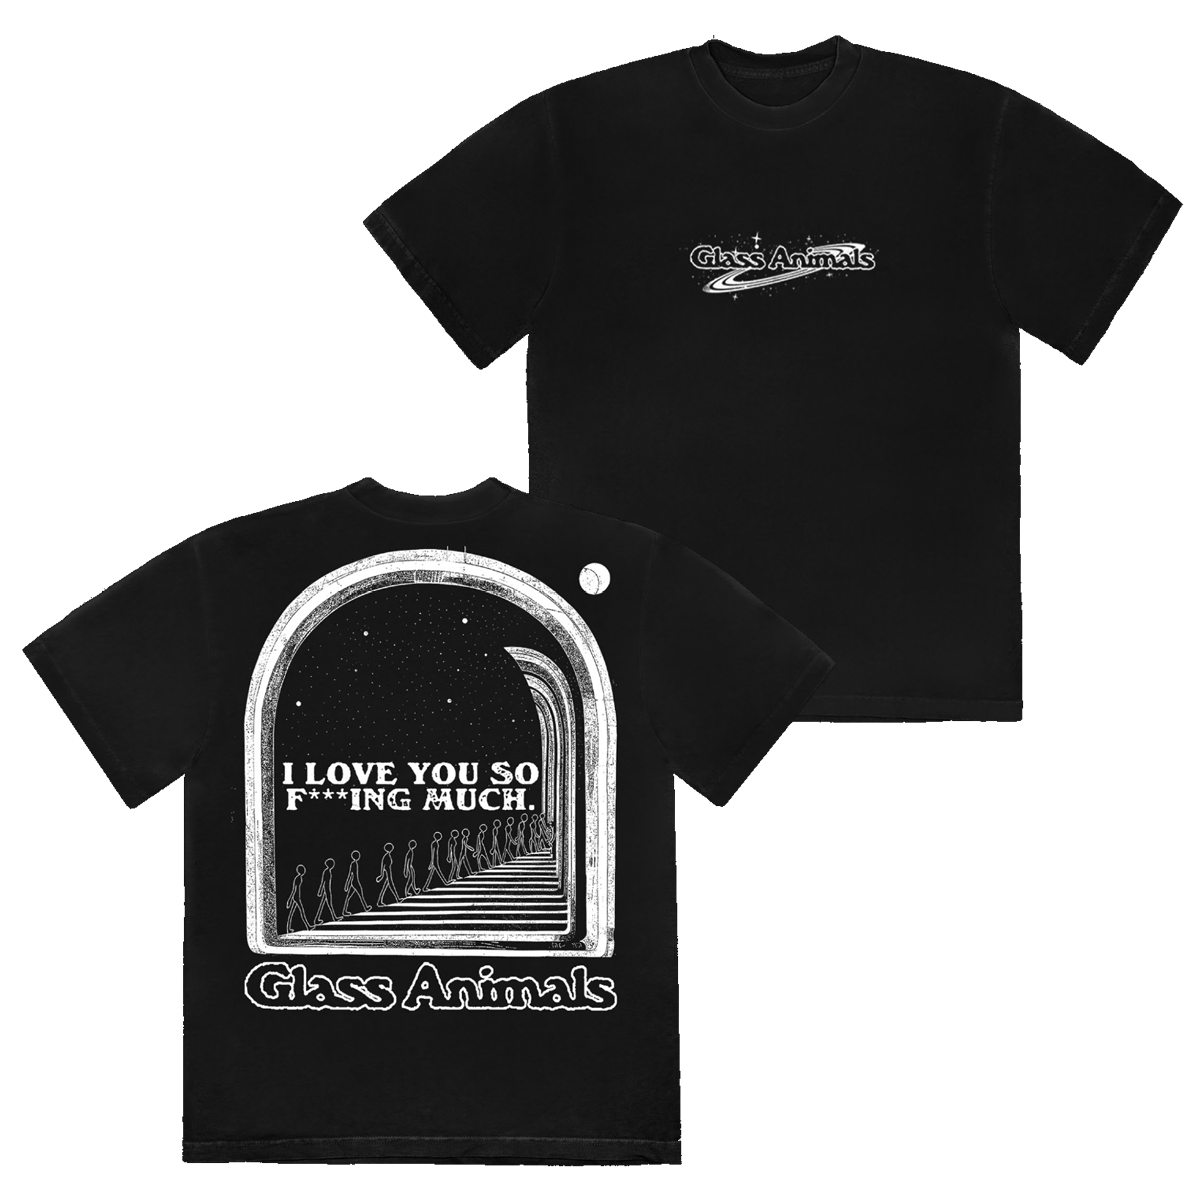 ILYSFM T-Shirt in Black - Glass Animals